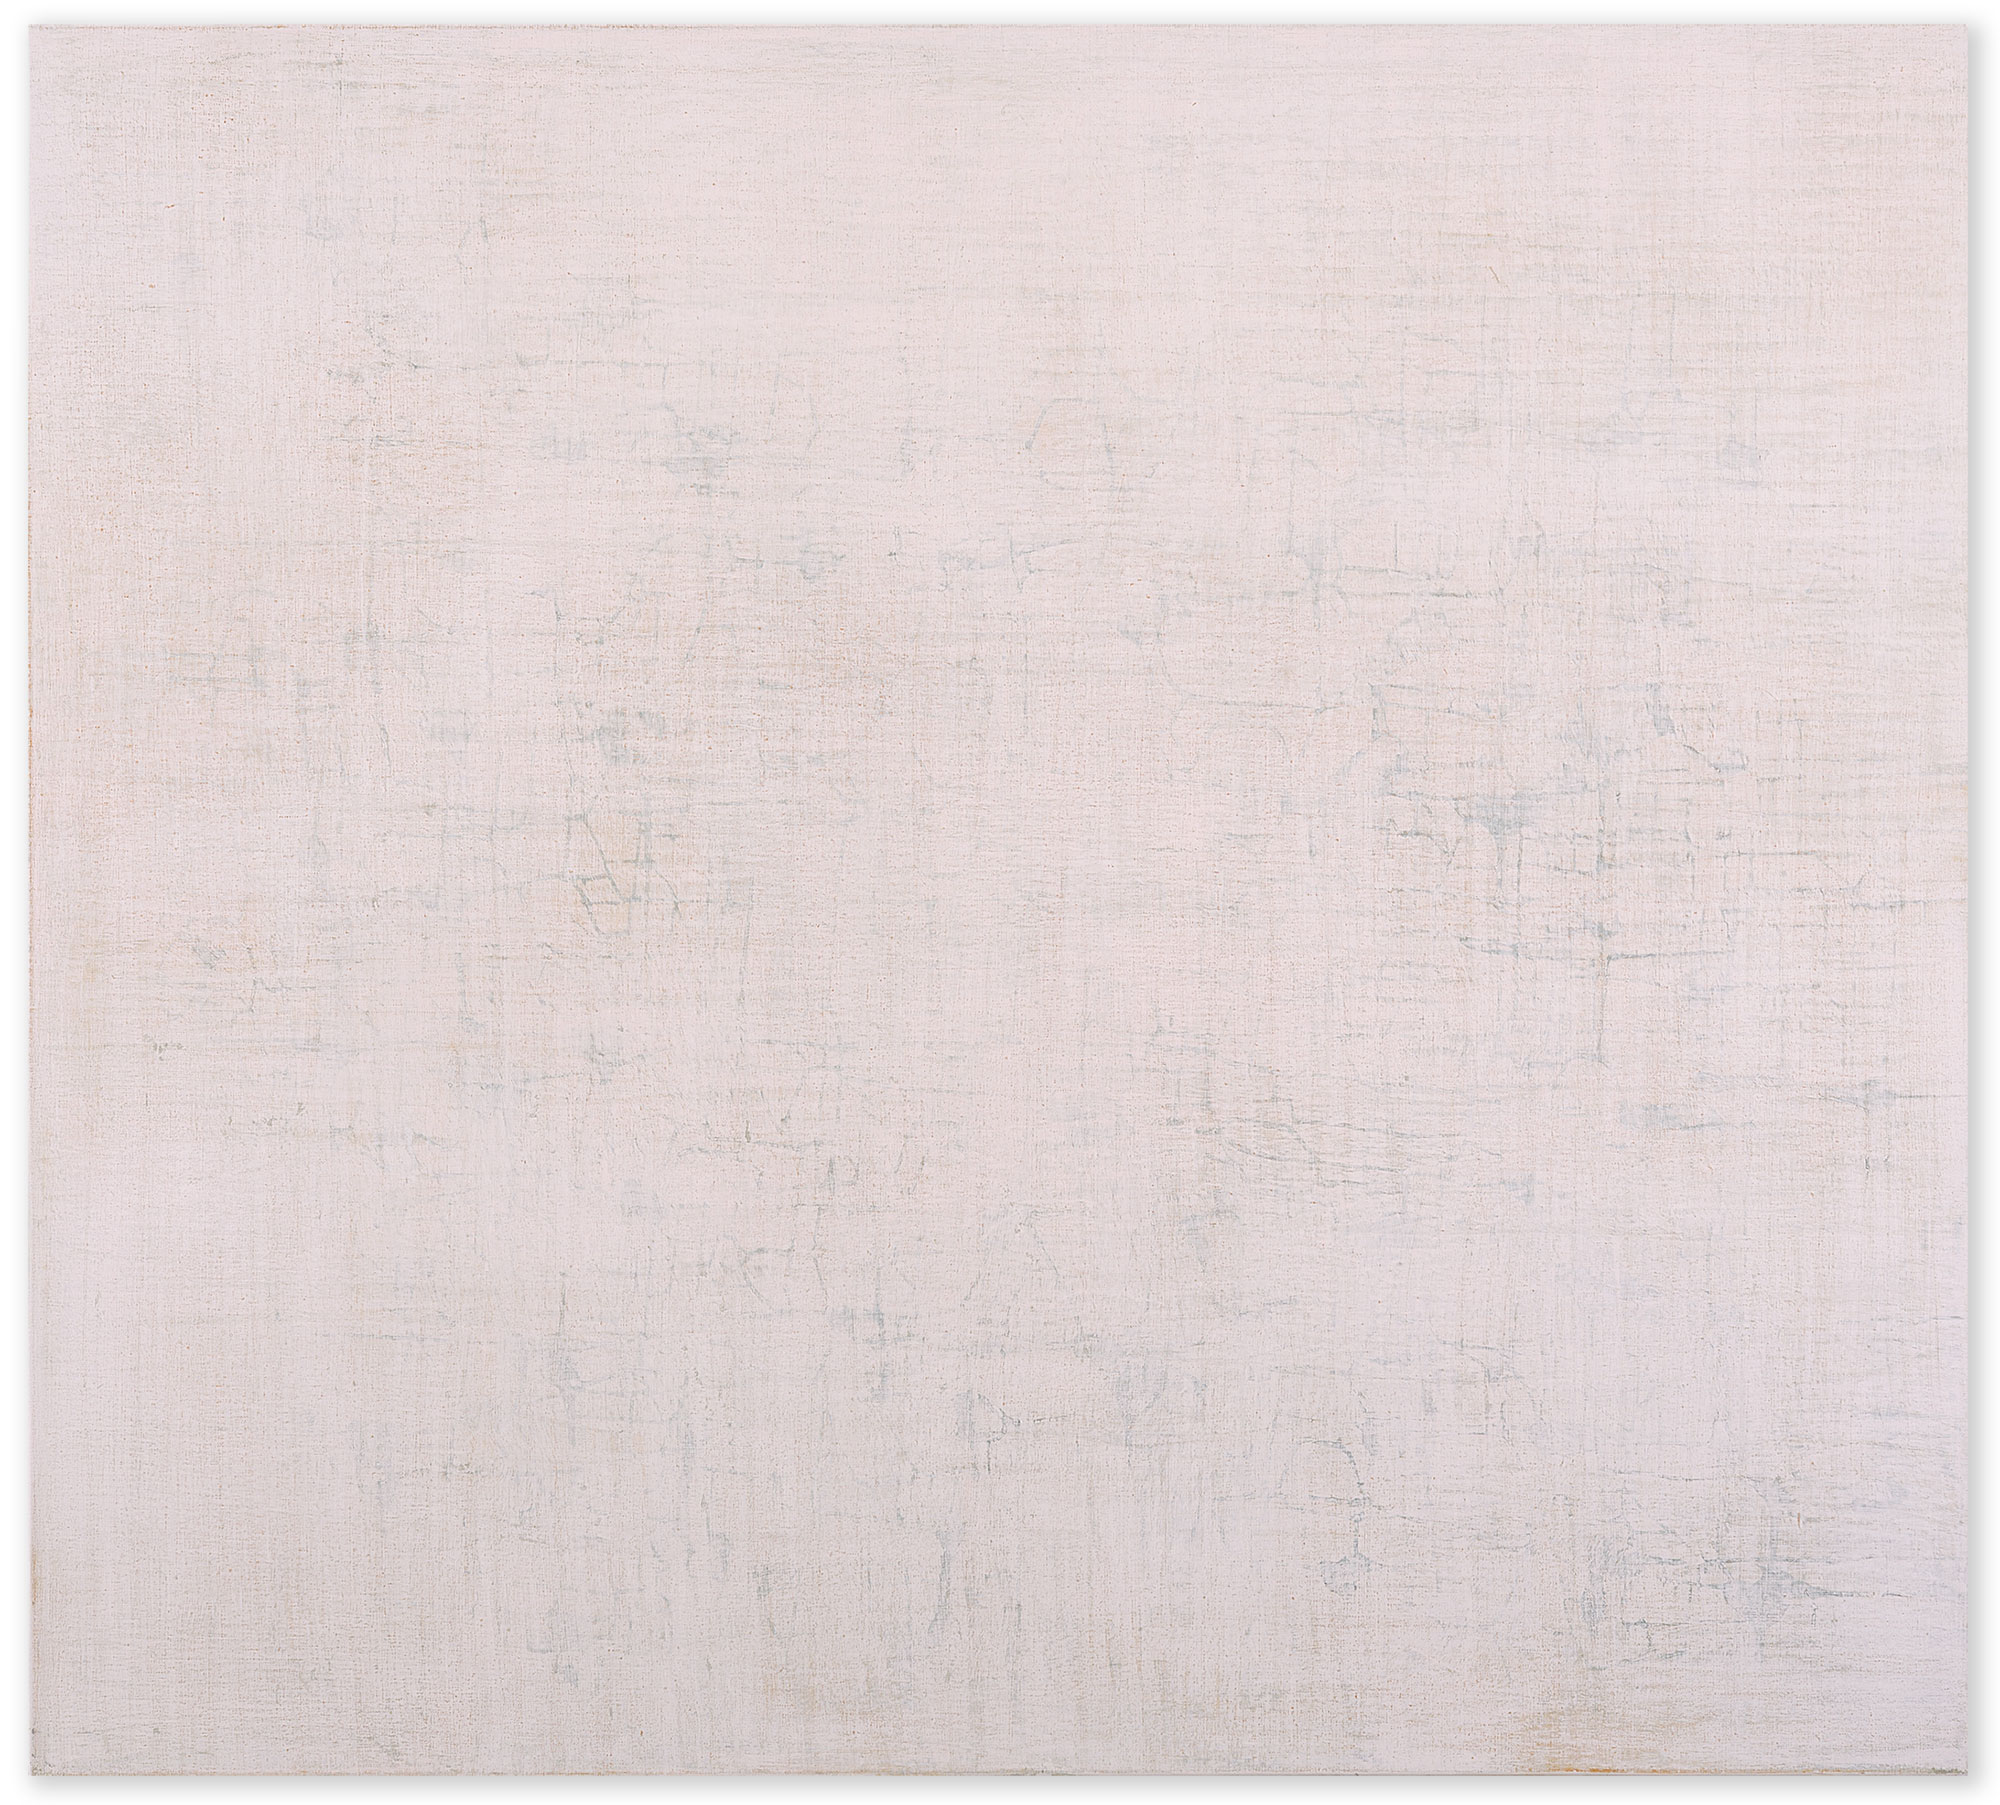 MO K4 / 2013, egg tempera on canvas, 180 x 200 cm